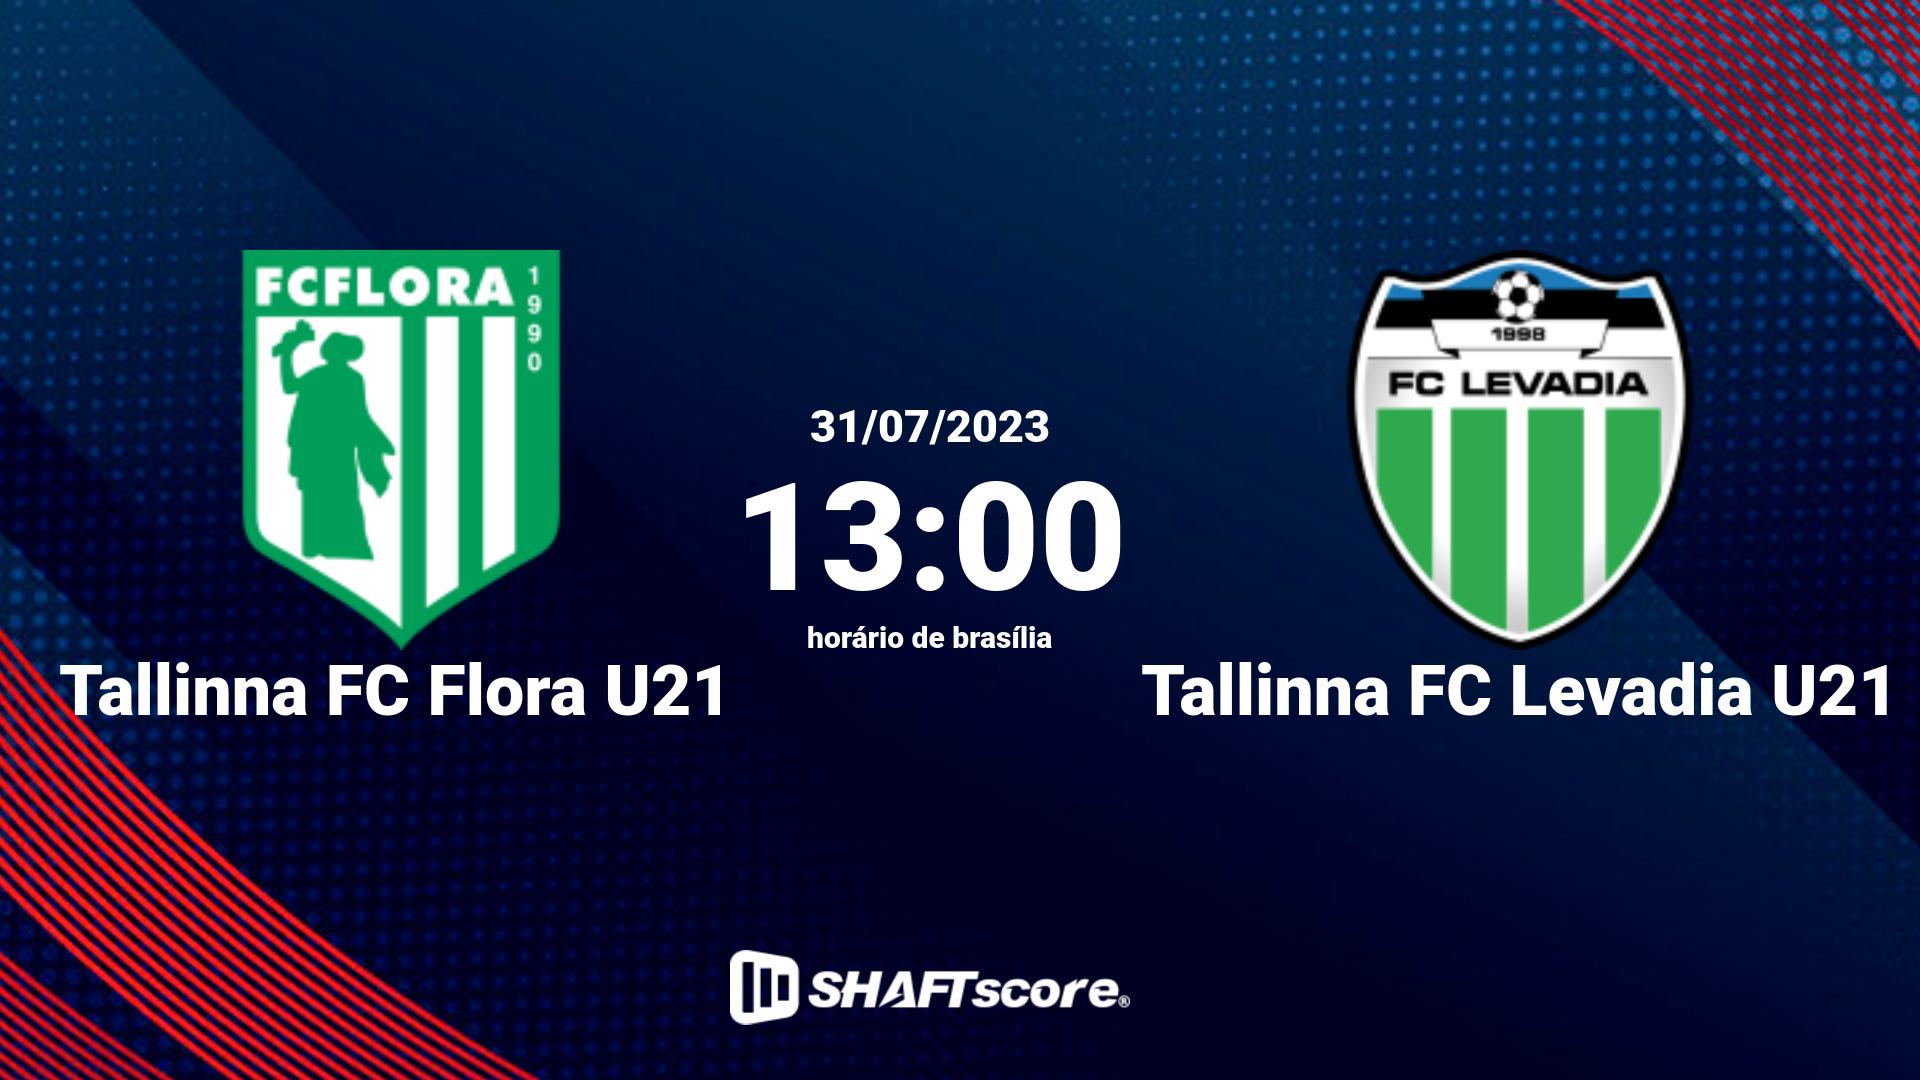 Estatísticas do jogo Tallinna FC Flora U21 vs Tallinna FC Levadia U21 31.07 13:00